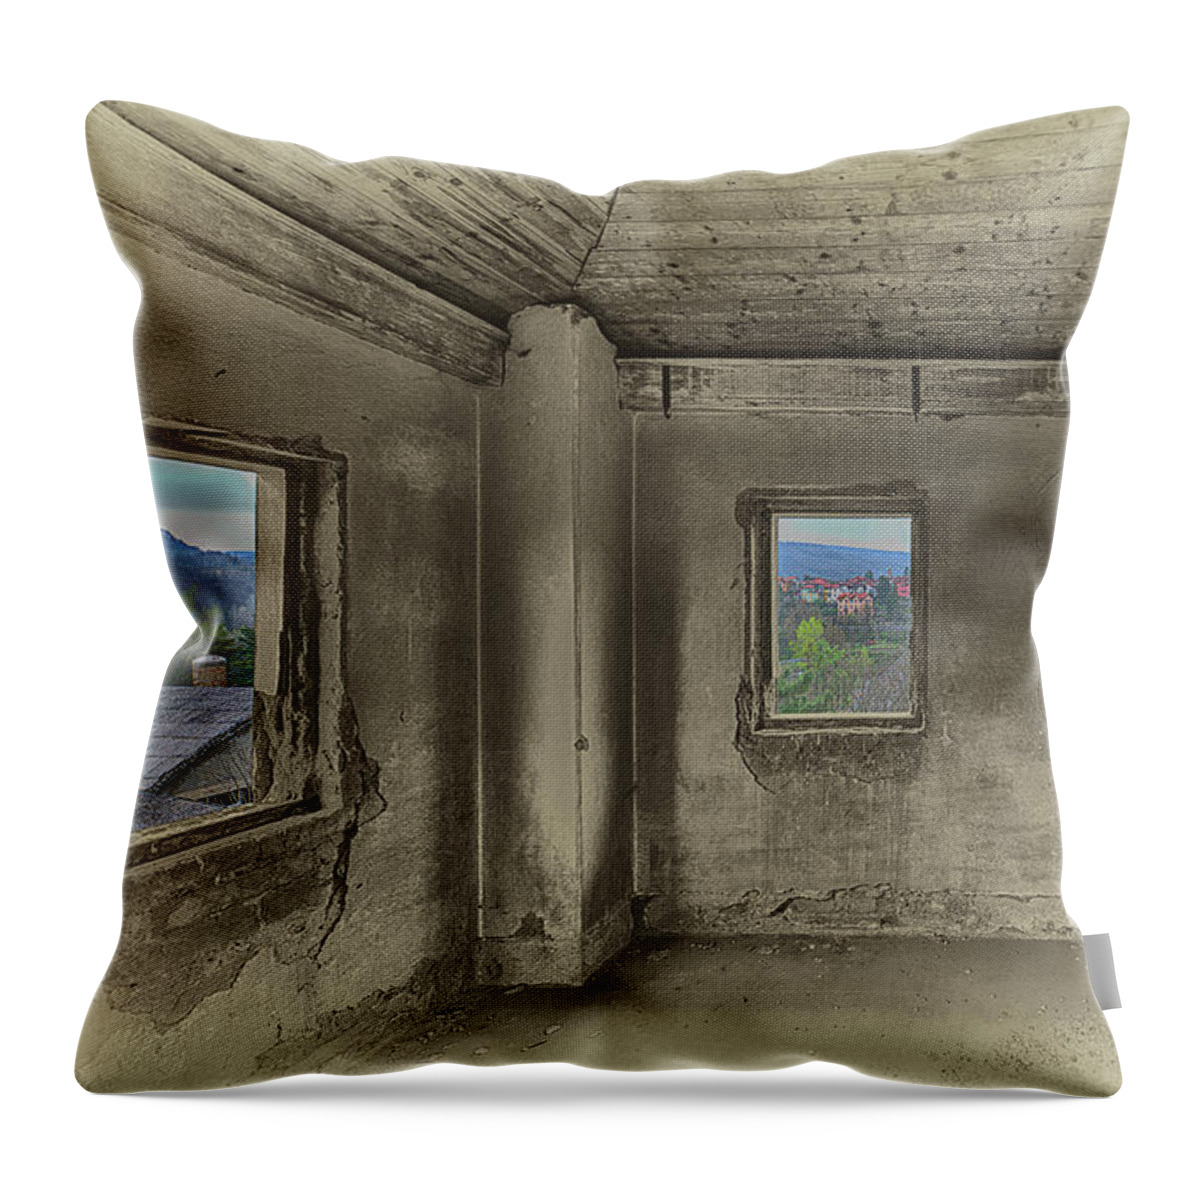 Luoghi Abbandonati Throw Pillow featuring the photograph Camera Con Vista - A Room With A View by Enrico Pelos